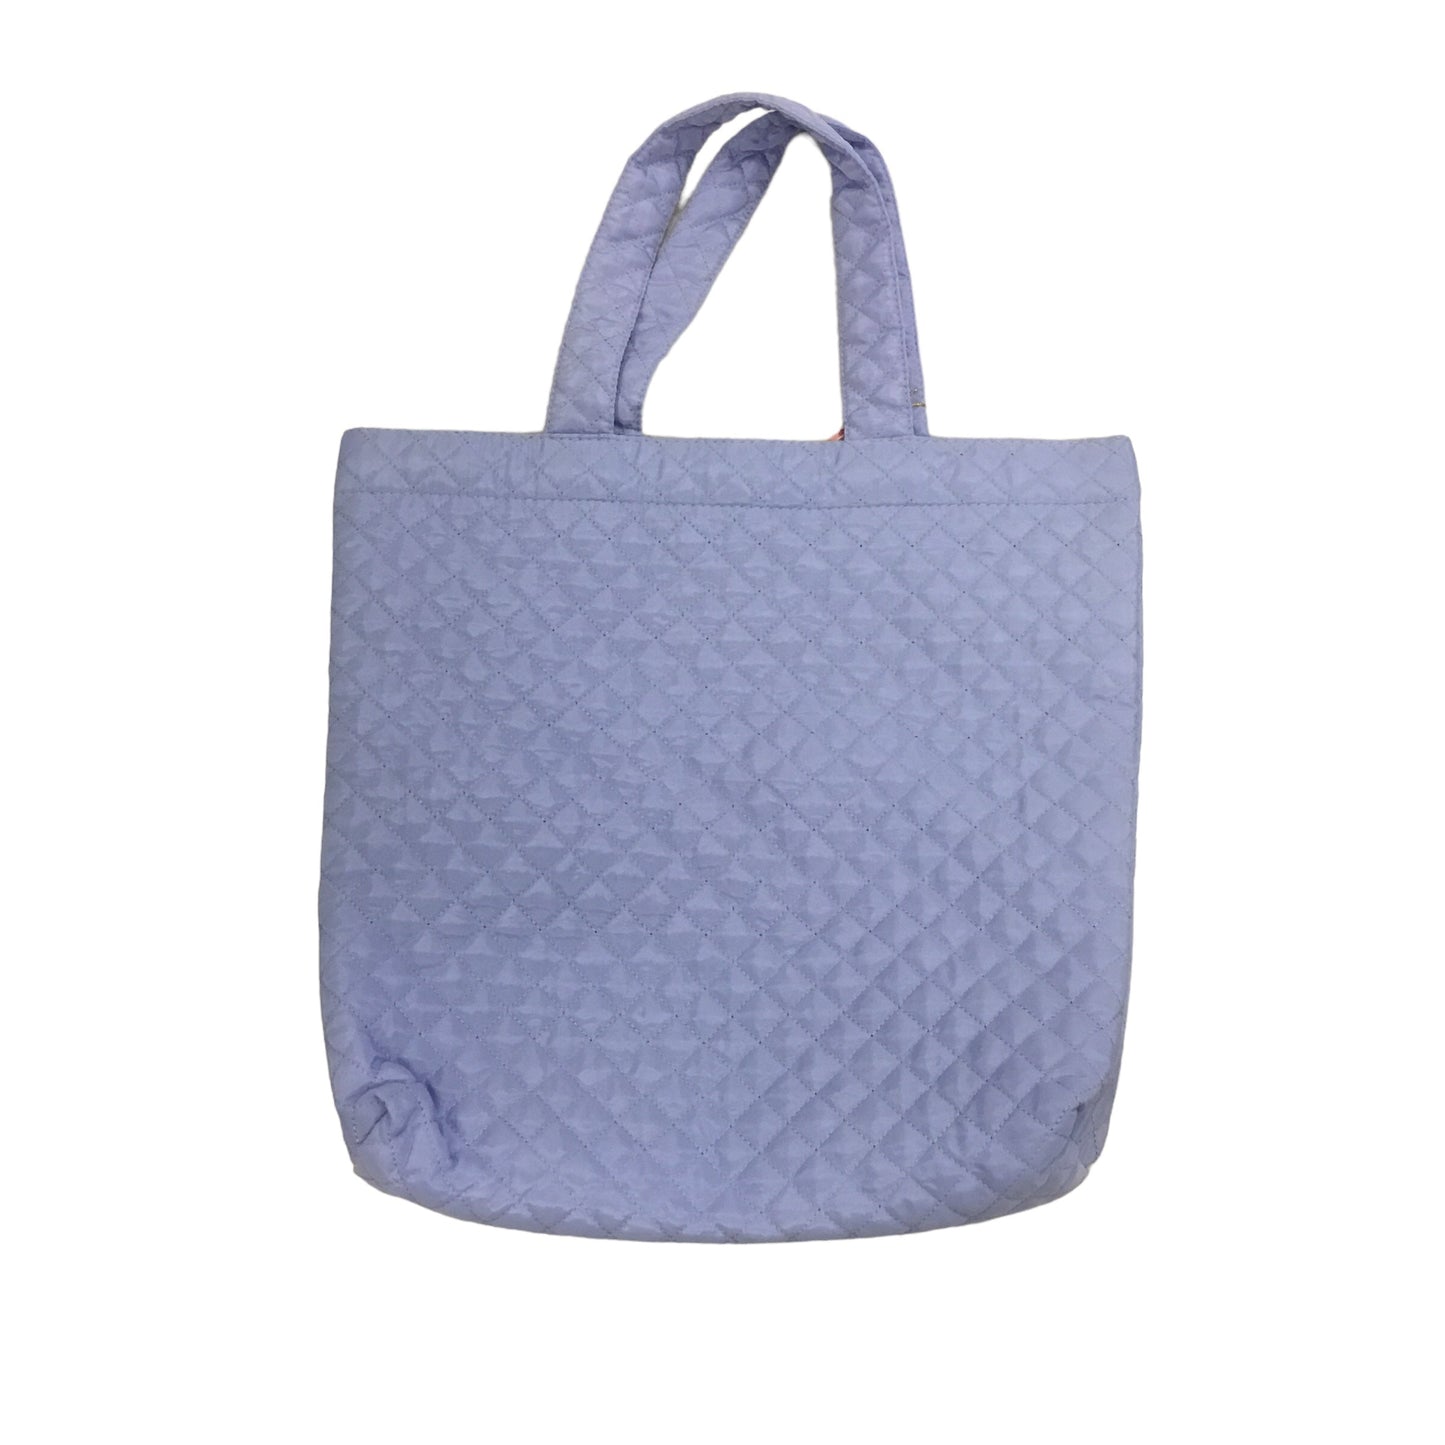 Handbag By Simply Southern  Size: Medium